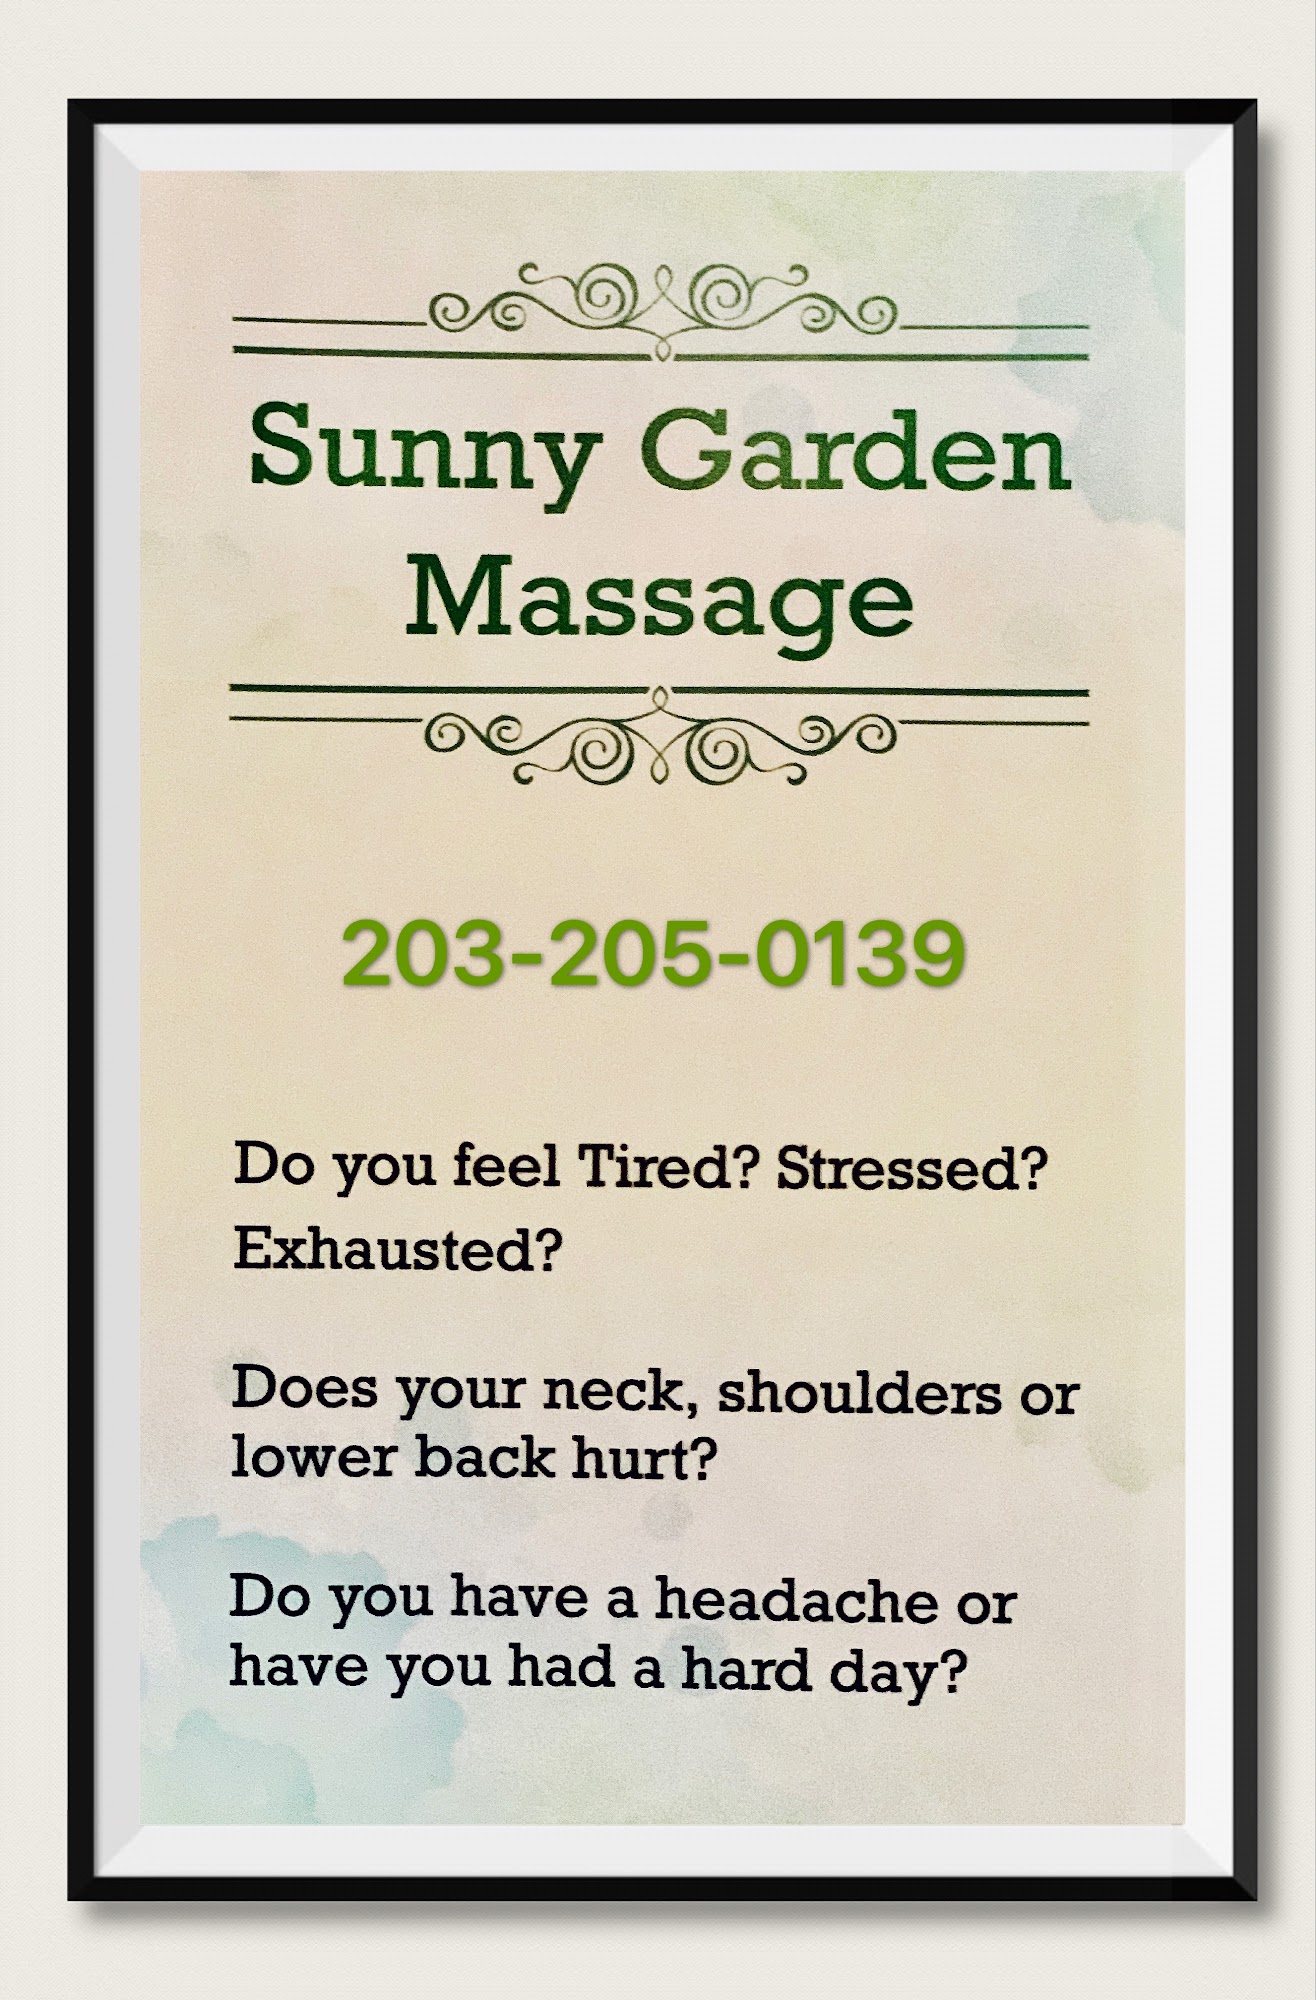 Sunny Garden Massage